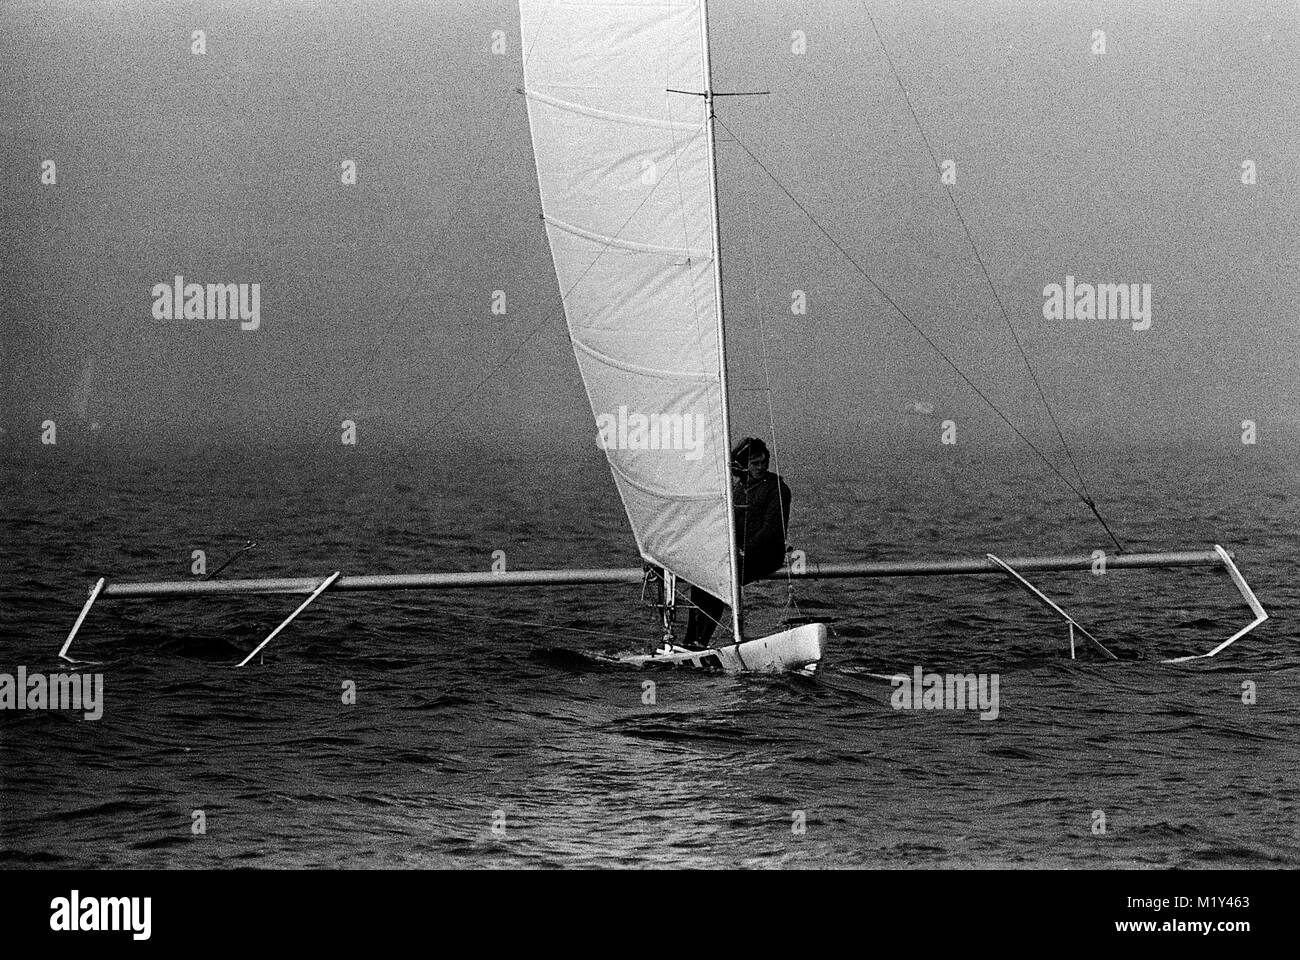 AJAXNETPHOTO.OTT,1978. PORTLAND, Inghilterra. - WEYMOUTH SPEED WEEK - fino dal cielo (SIMON SANDERSON) sul porto di Portland. Foto:JONATHAN EASTLAND/AJAX REF:2781310 20102 Foto Stock